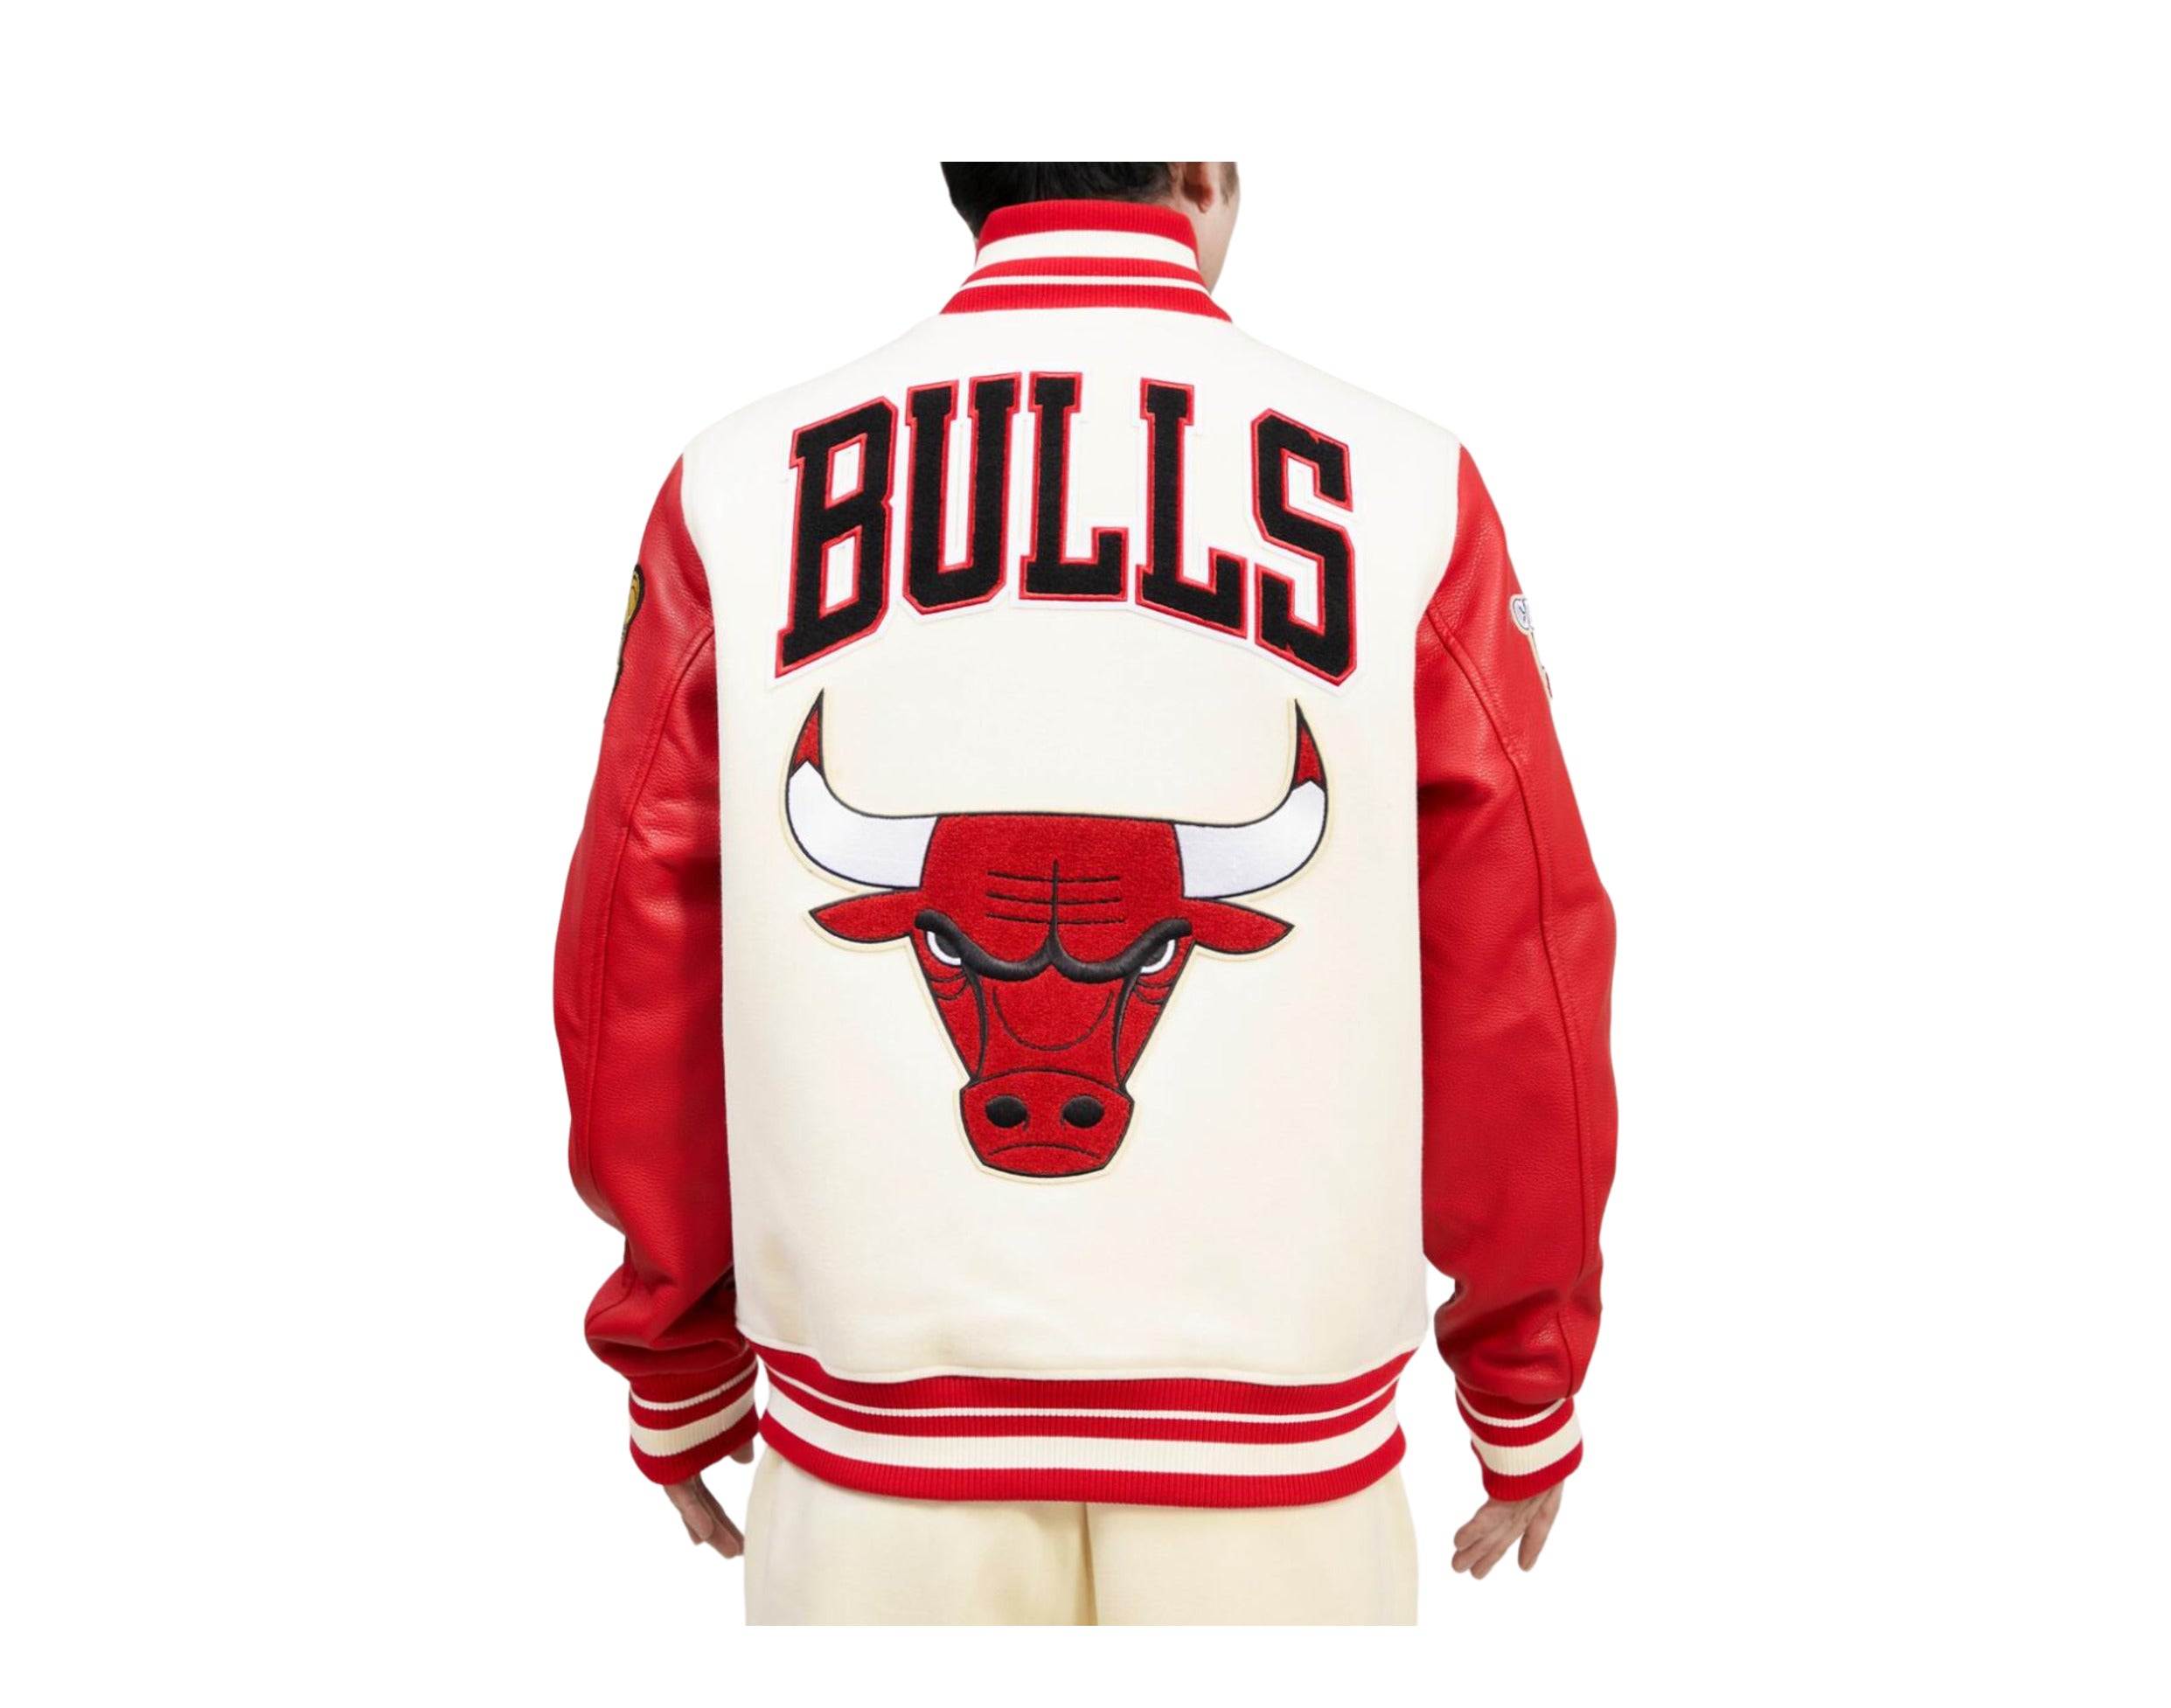 Pro Standard Chicago Bulls Retro Classic Rib Wool Varsity Jacket (Black/red/black) M